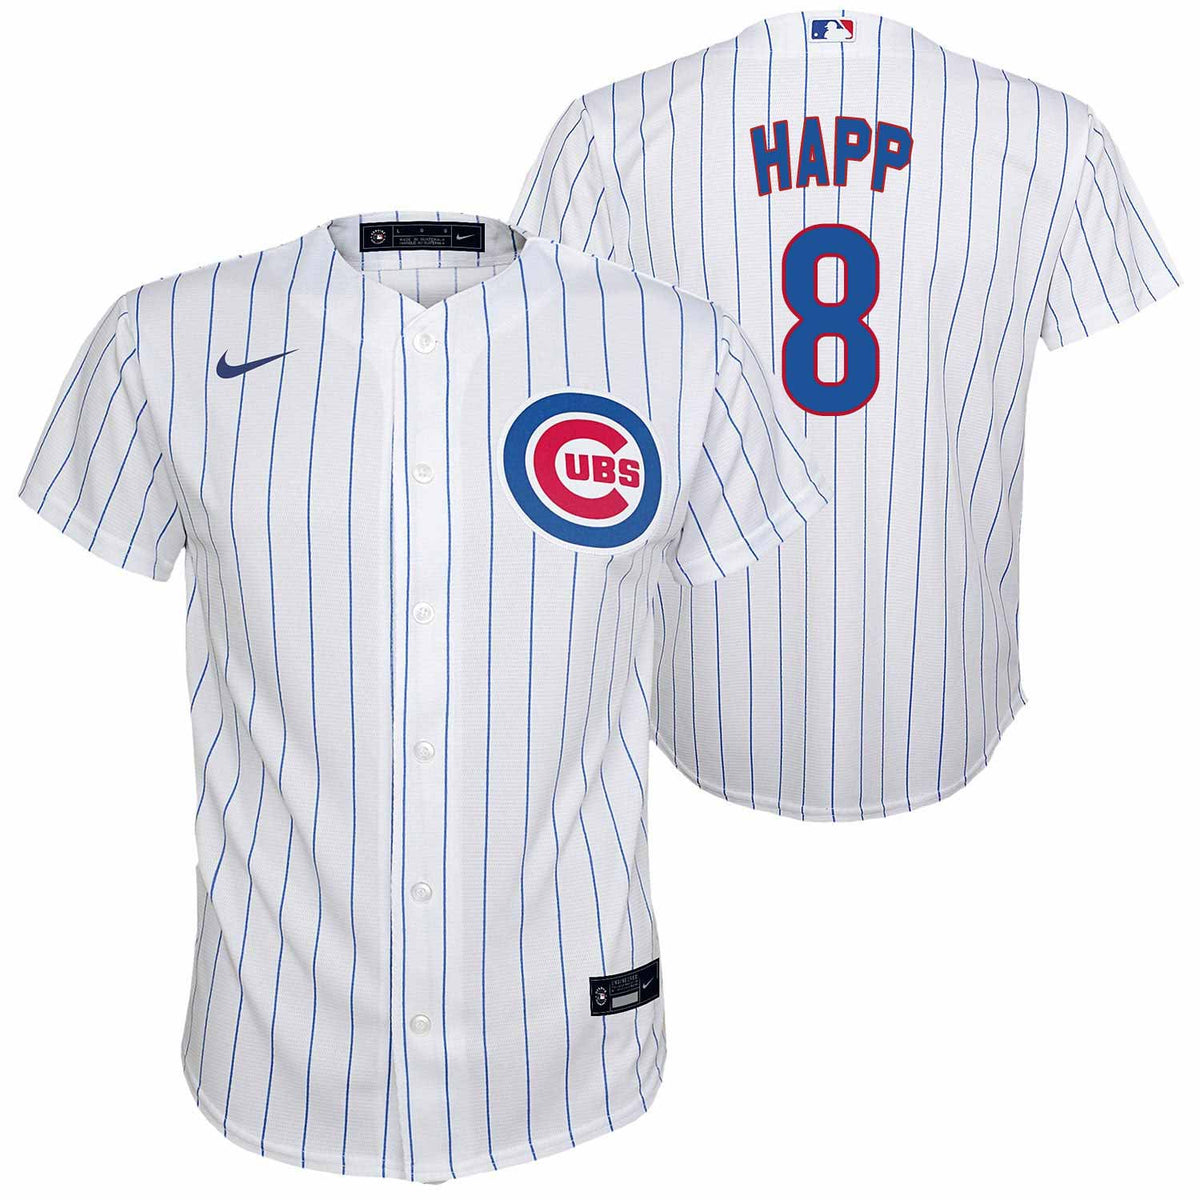 Nike Men's Chicago Cubs Ian Happ #8 Royal Cool Base Jersey